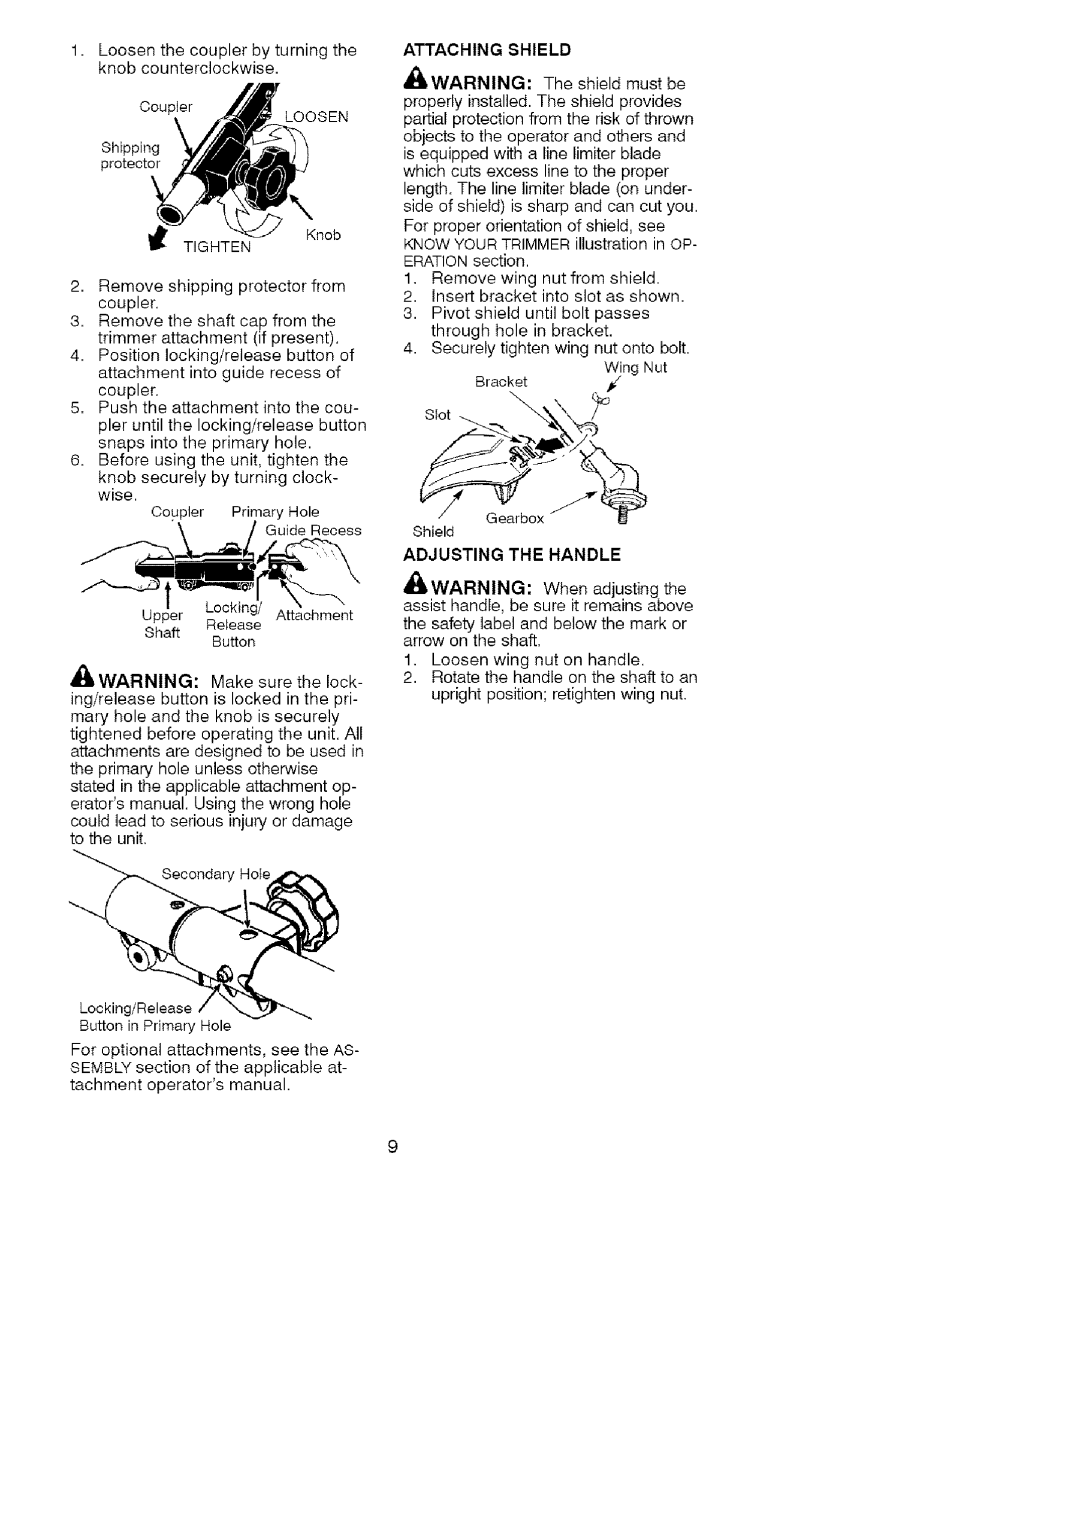 Craftsman 358.79107 manual Attaching Shield, Adjusting The Handle 